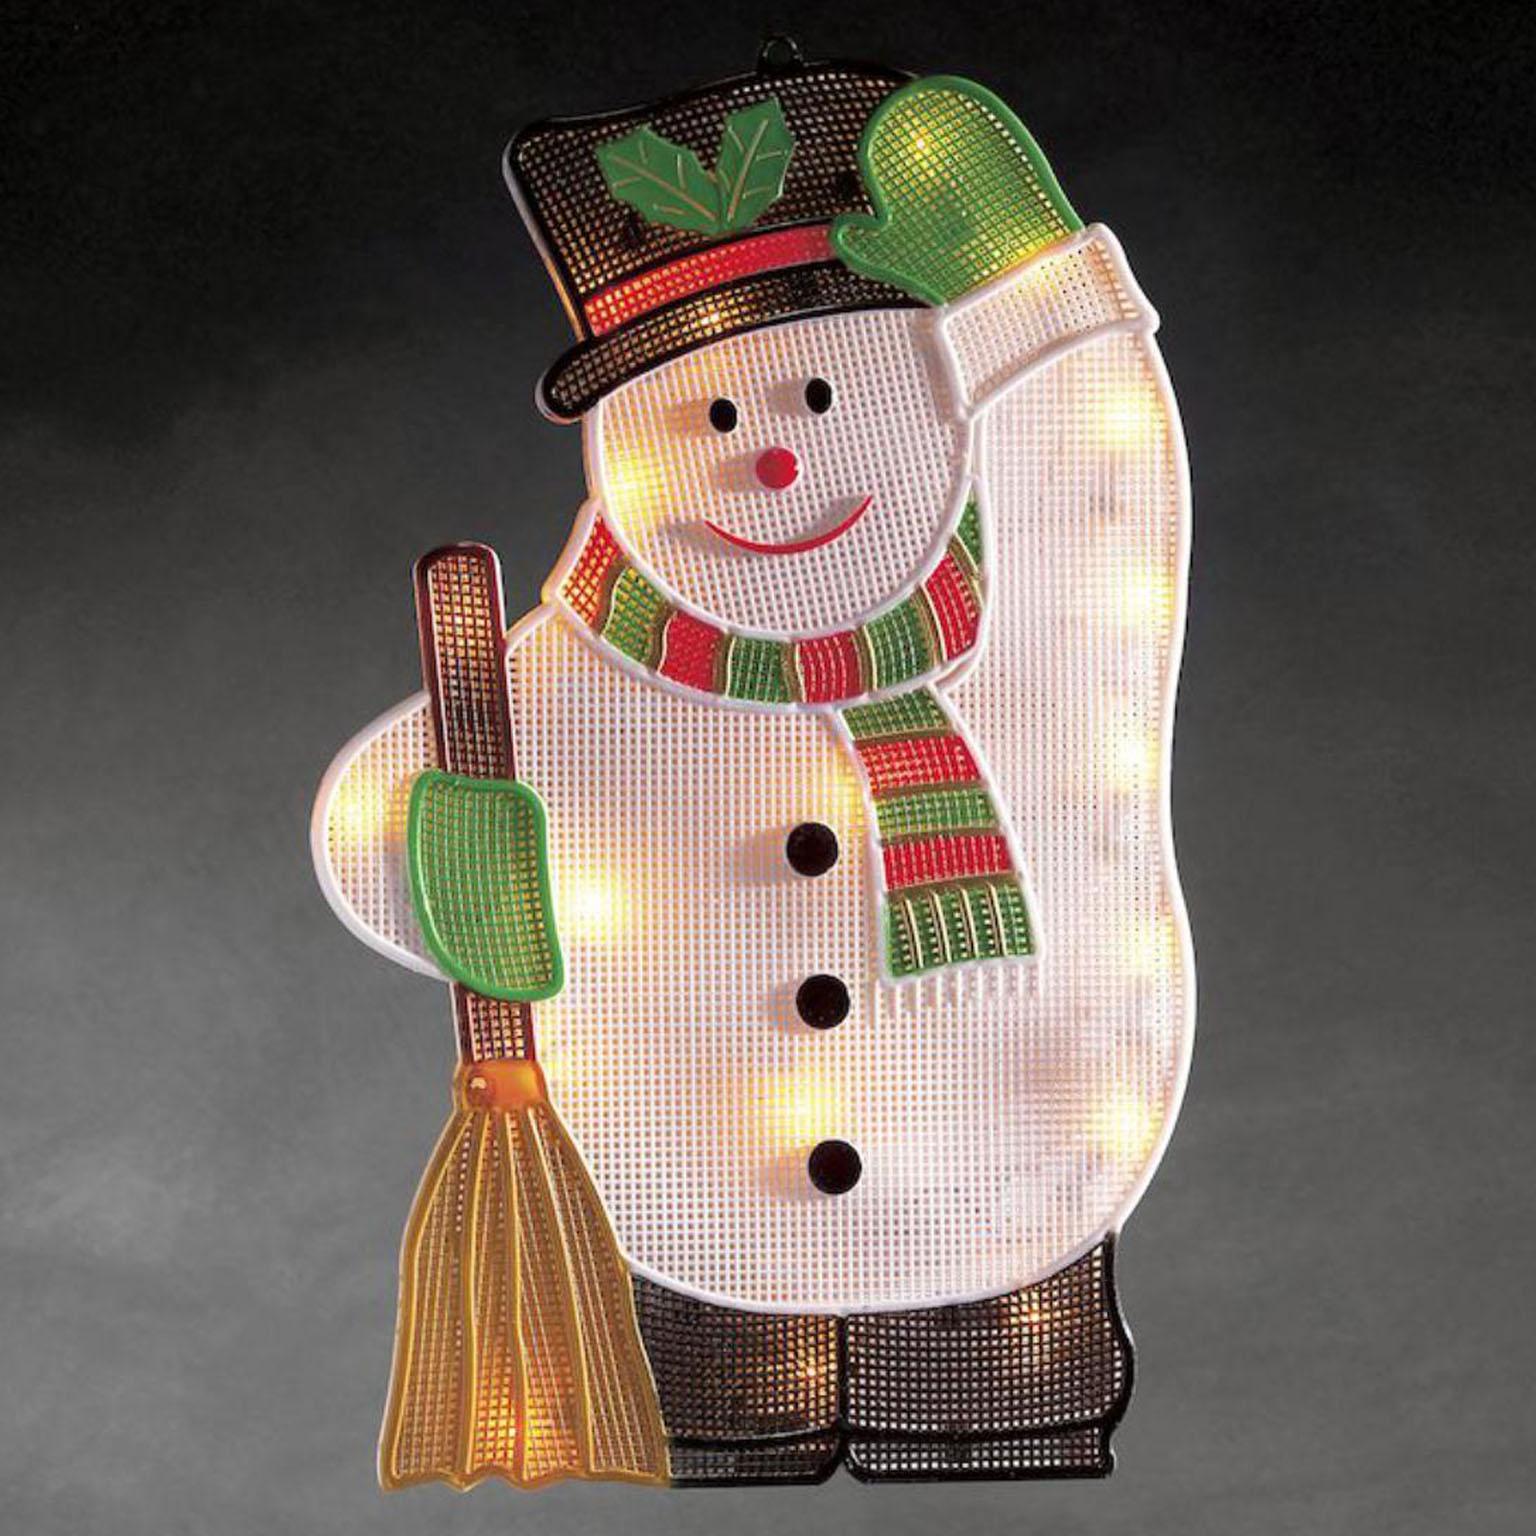 Led kerstfiguur - 20 lampjes - 46 x 28 centimeter - warm wit